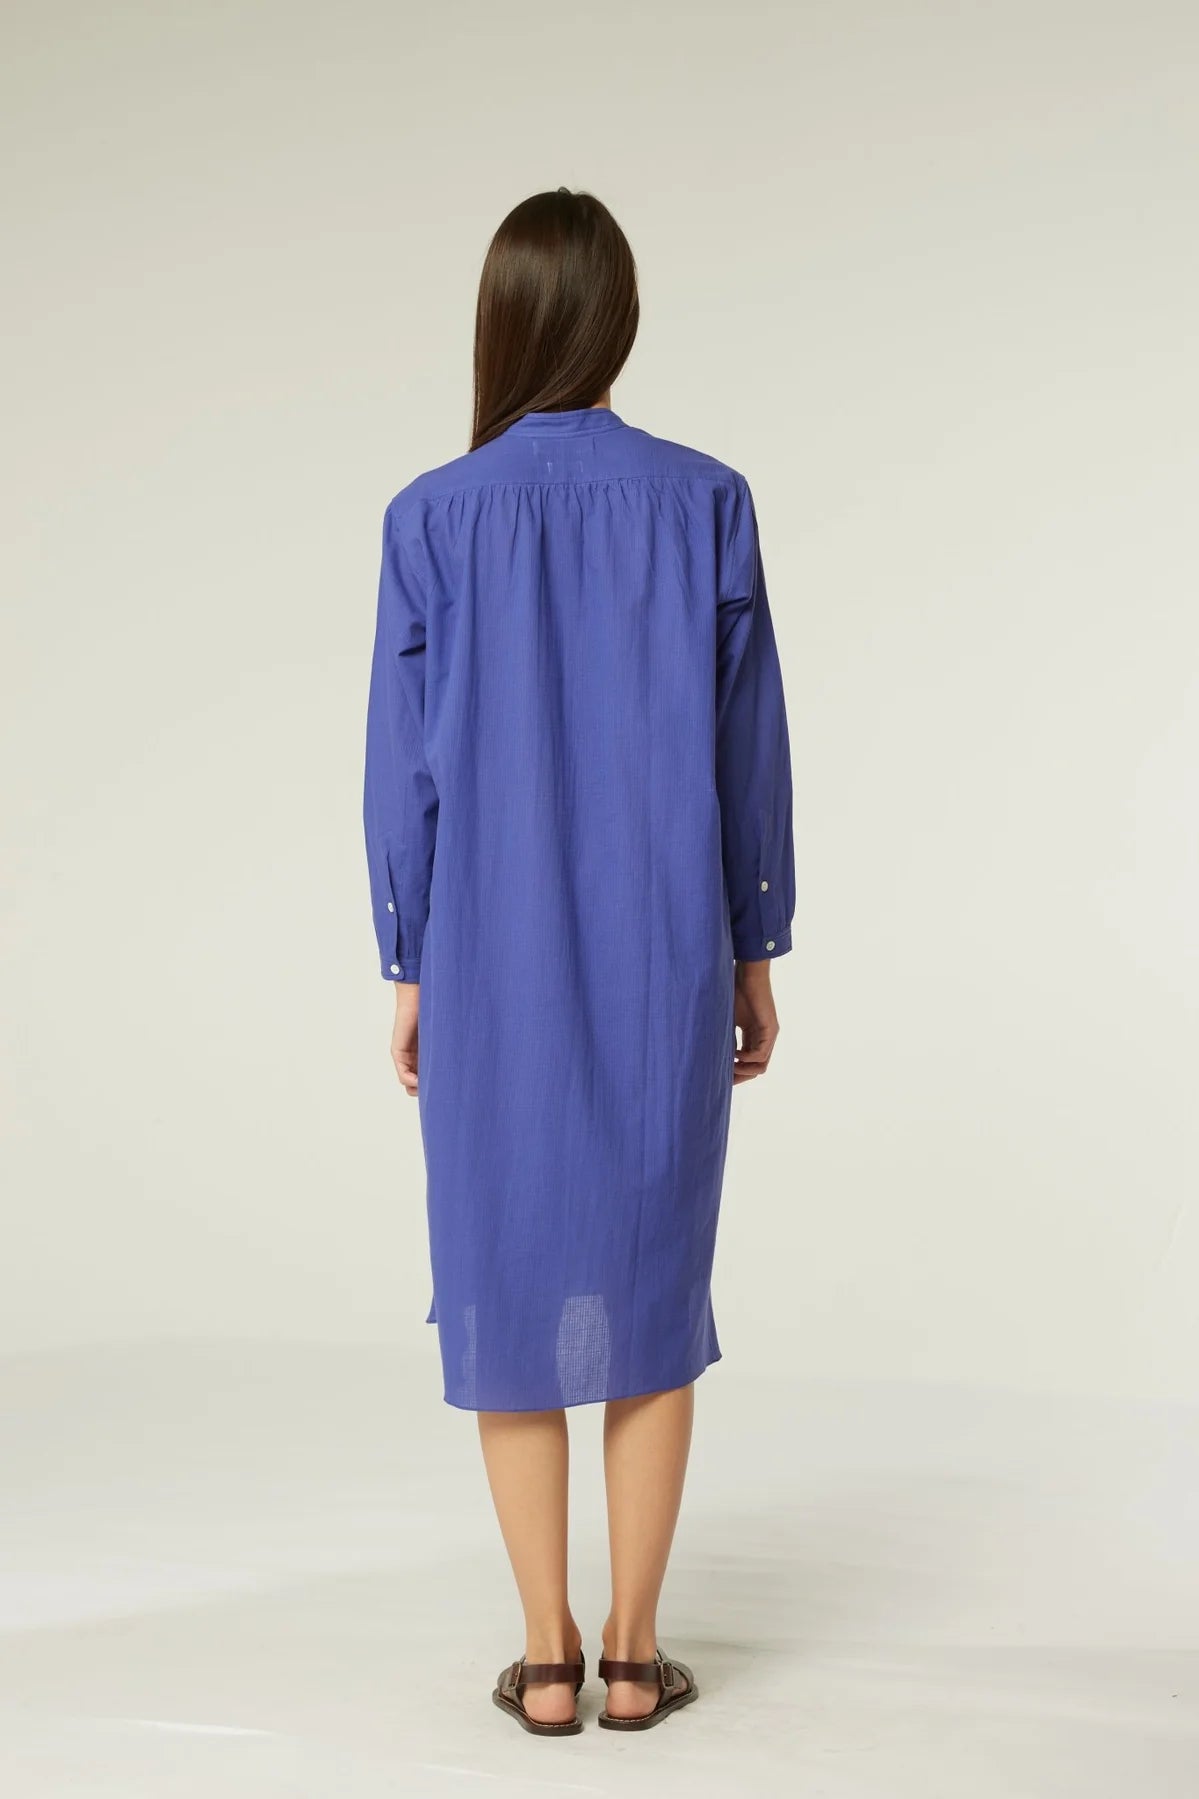 Moismont Dress Chloe Colorama Pansy Blue - Size 10/12